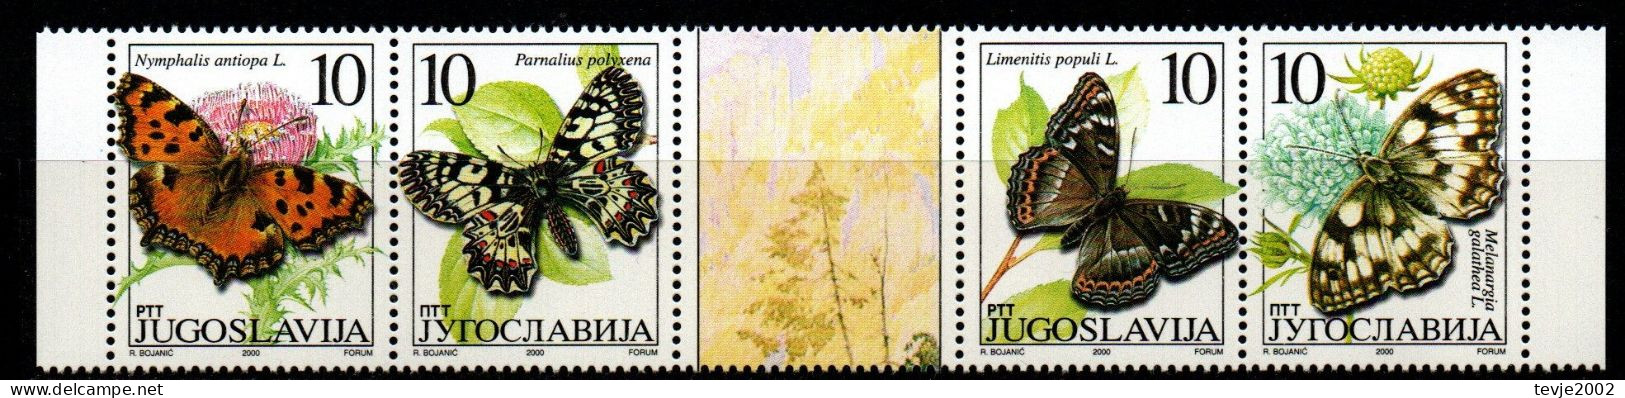 Jugoslawien 2000 - Mi.Nr. 2962 - 2965 - Postfrisch MNH - Tiere Animals Schmetterlinge Butterflies - Vlinders